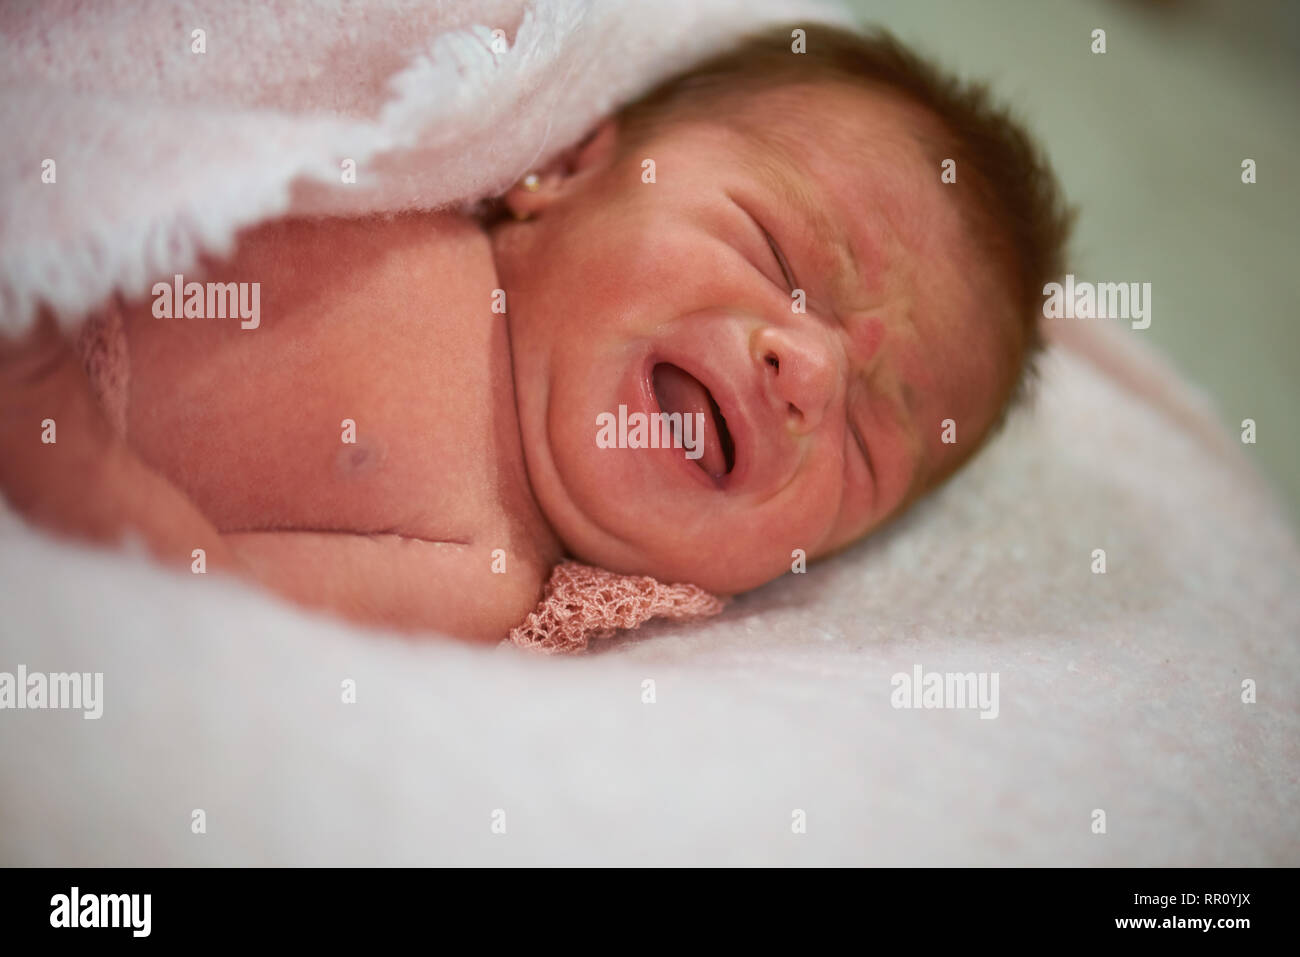 Newborn baby cry having colic close up portrait Stock Photo